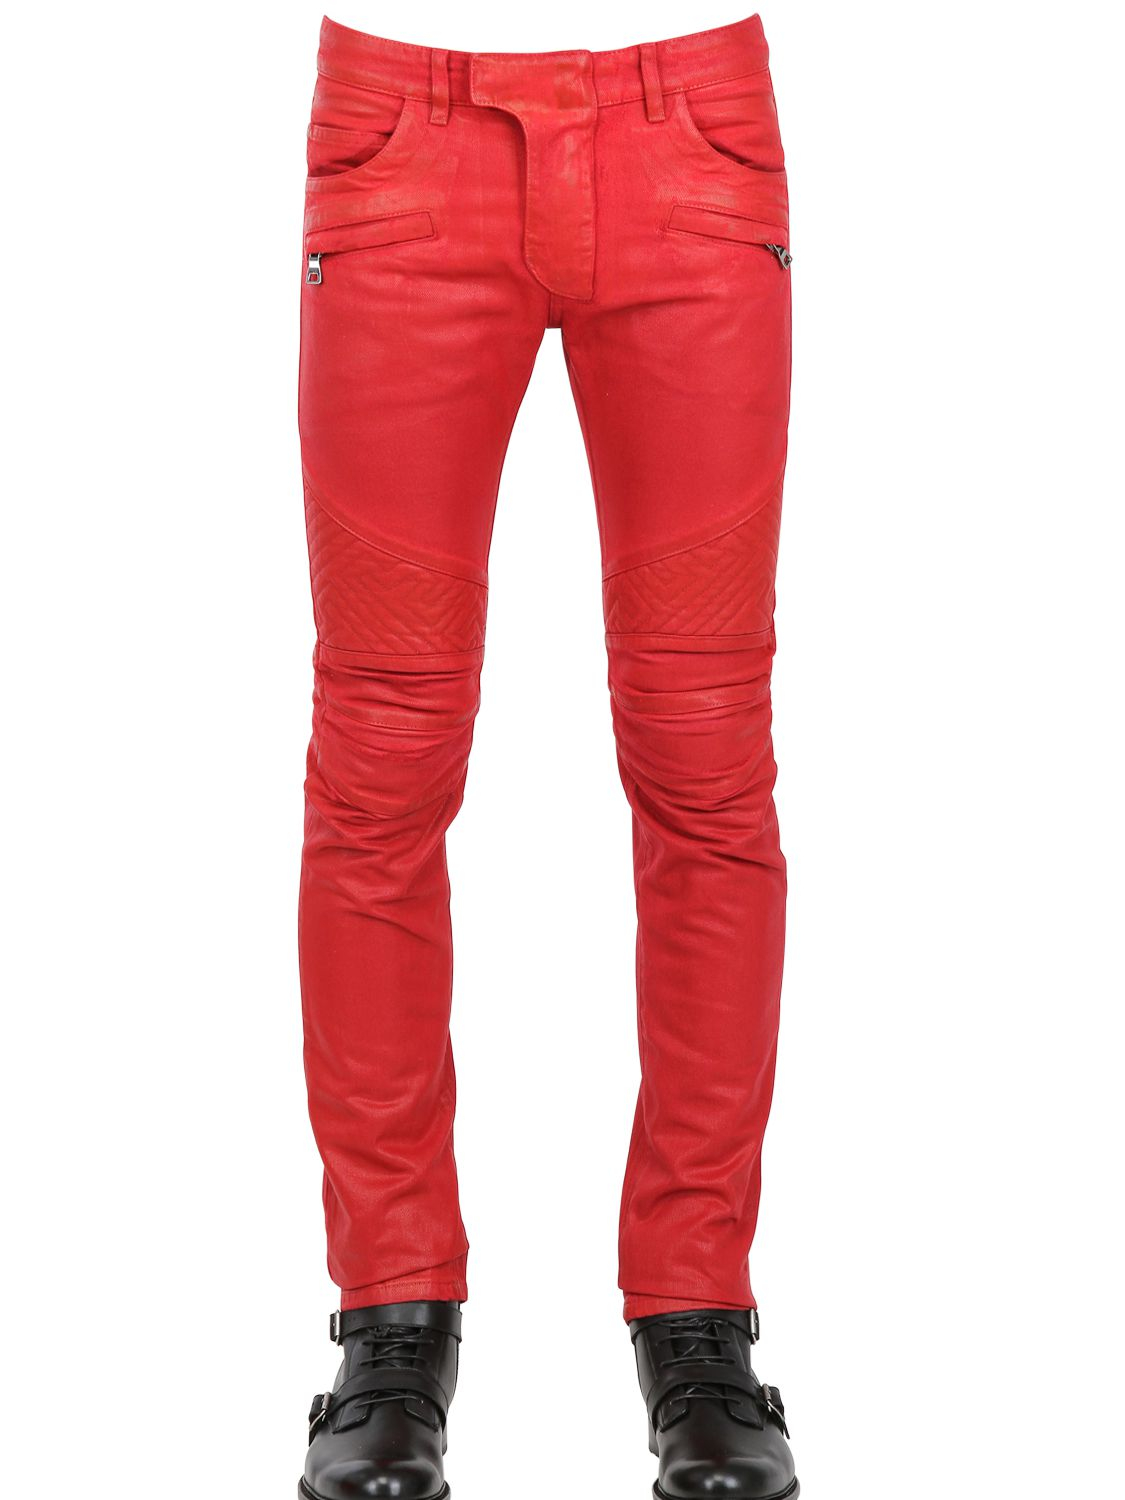 BALMAIN Pants Women | Casual pants in jersey Blue | BALMAIN BF1OB110JG70  SJV - Leam Luxury Shopping Online